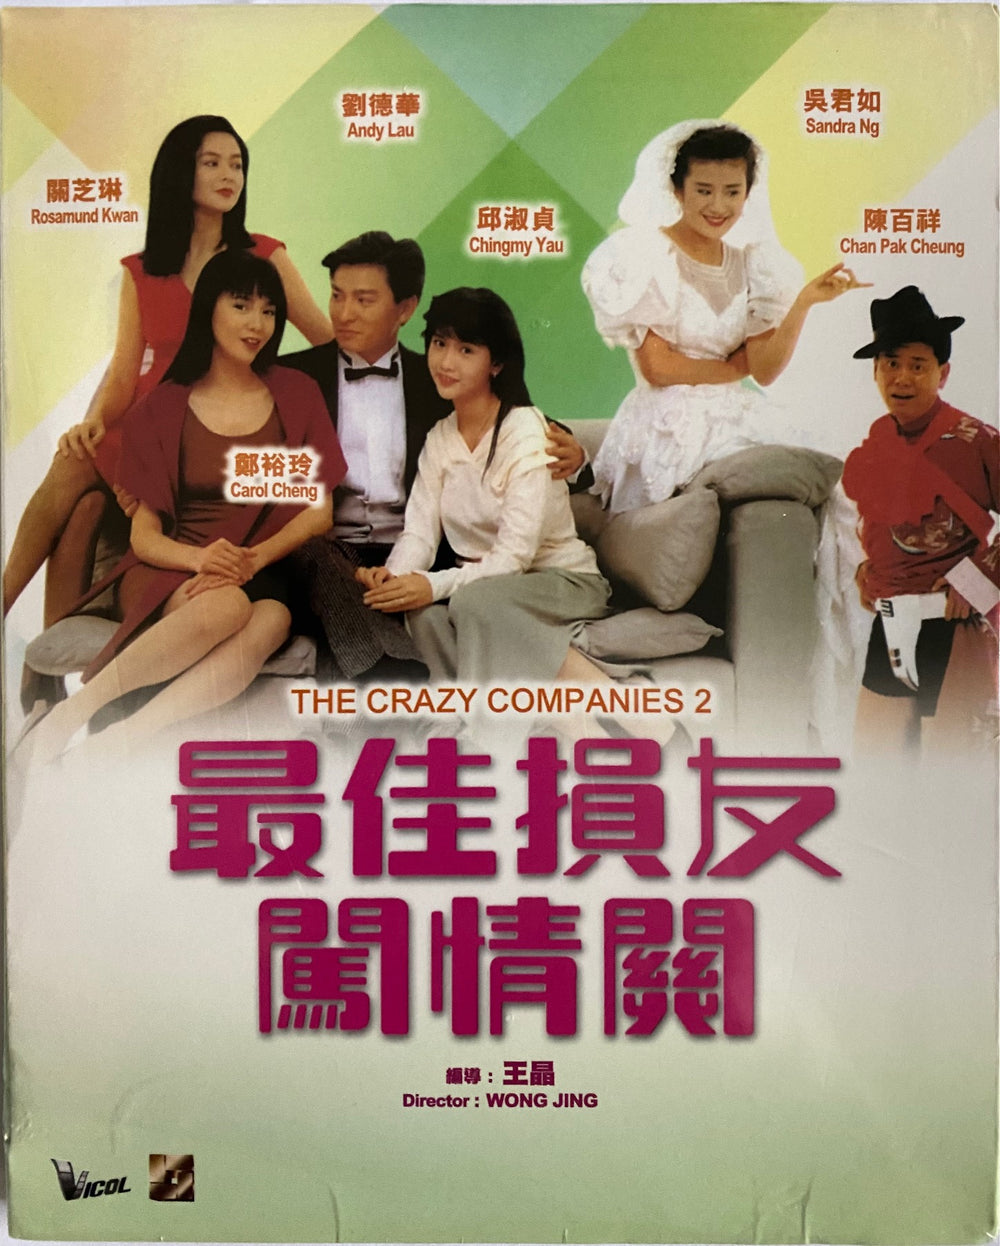 The Crazy Companies 2 最佳損友闖情關 1988 (Hong Kong Movie) BLU-RAY with English Sub (Region FREE)